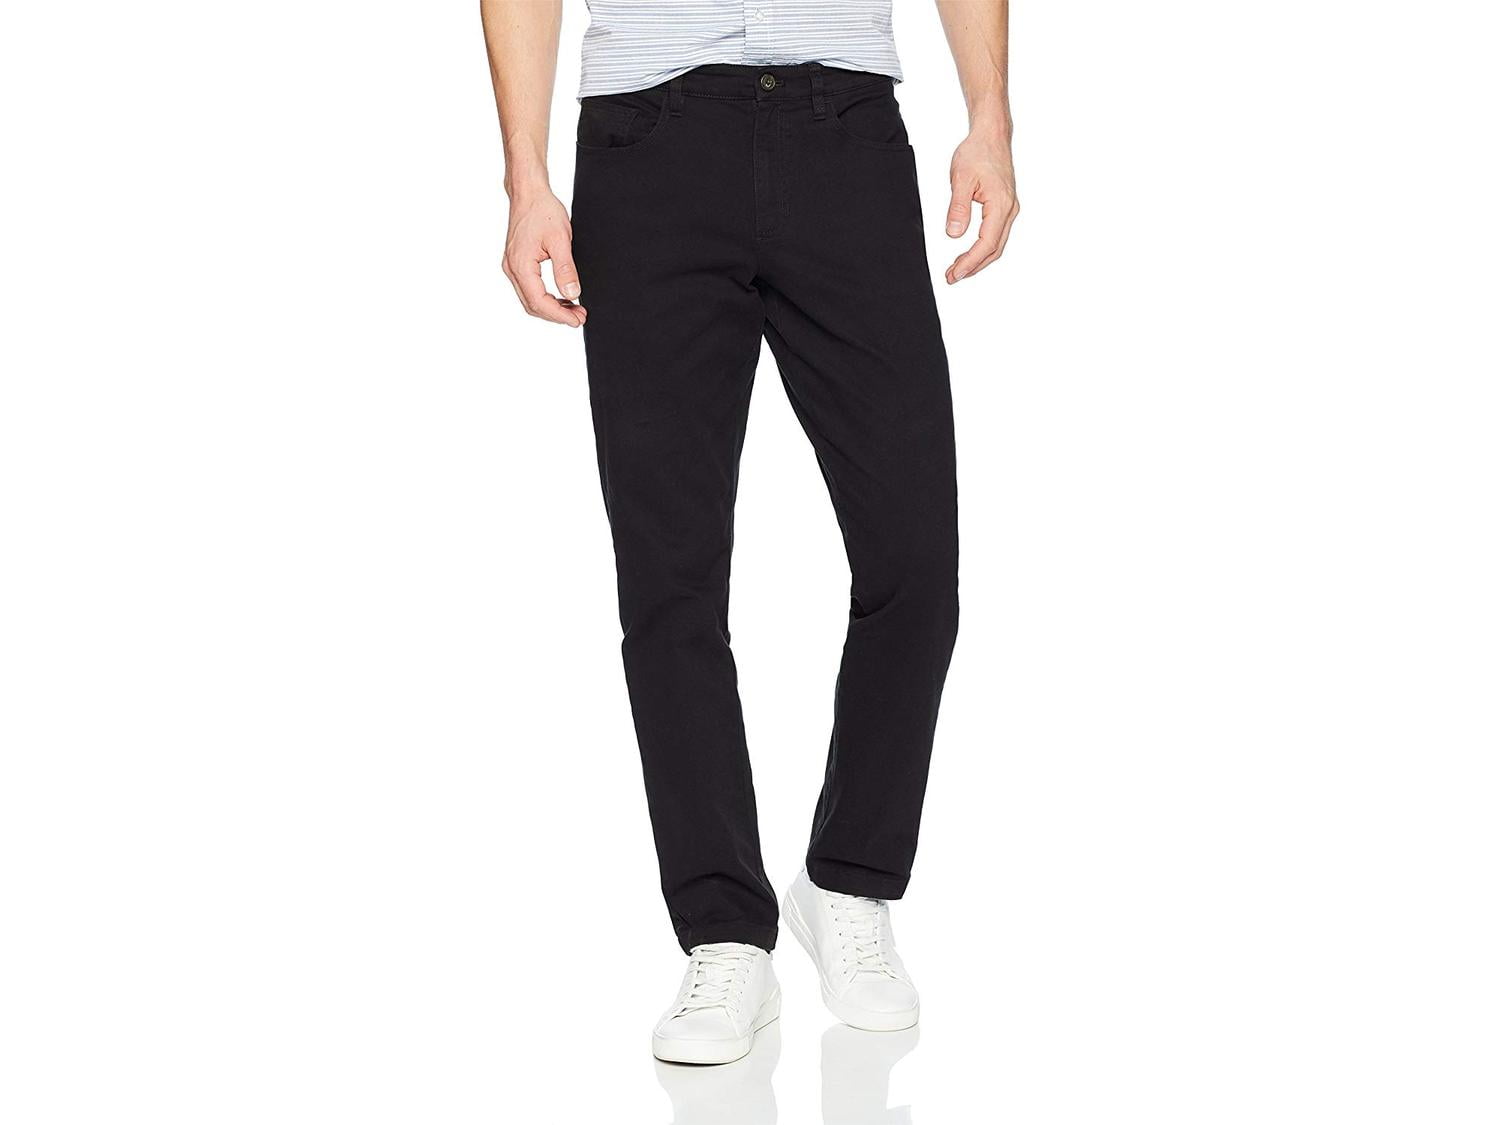 Size 33W x 32L Black, Goodthreads Men's Slim-Fit 5-Pocket Chino Pant Black 